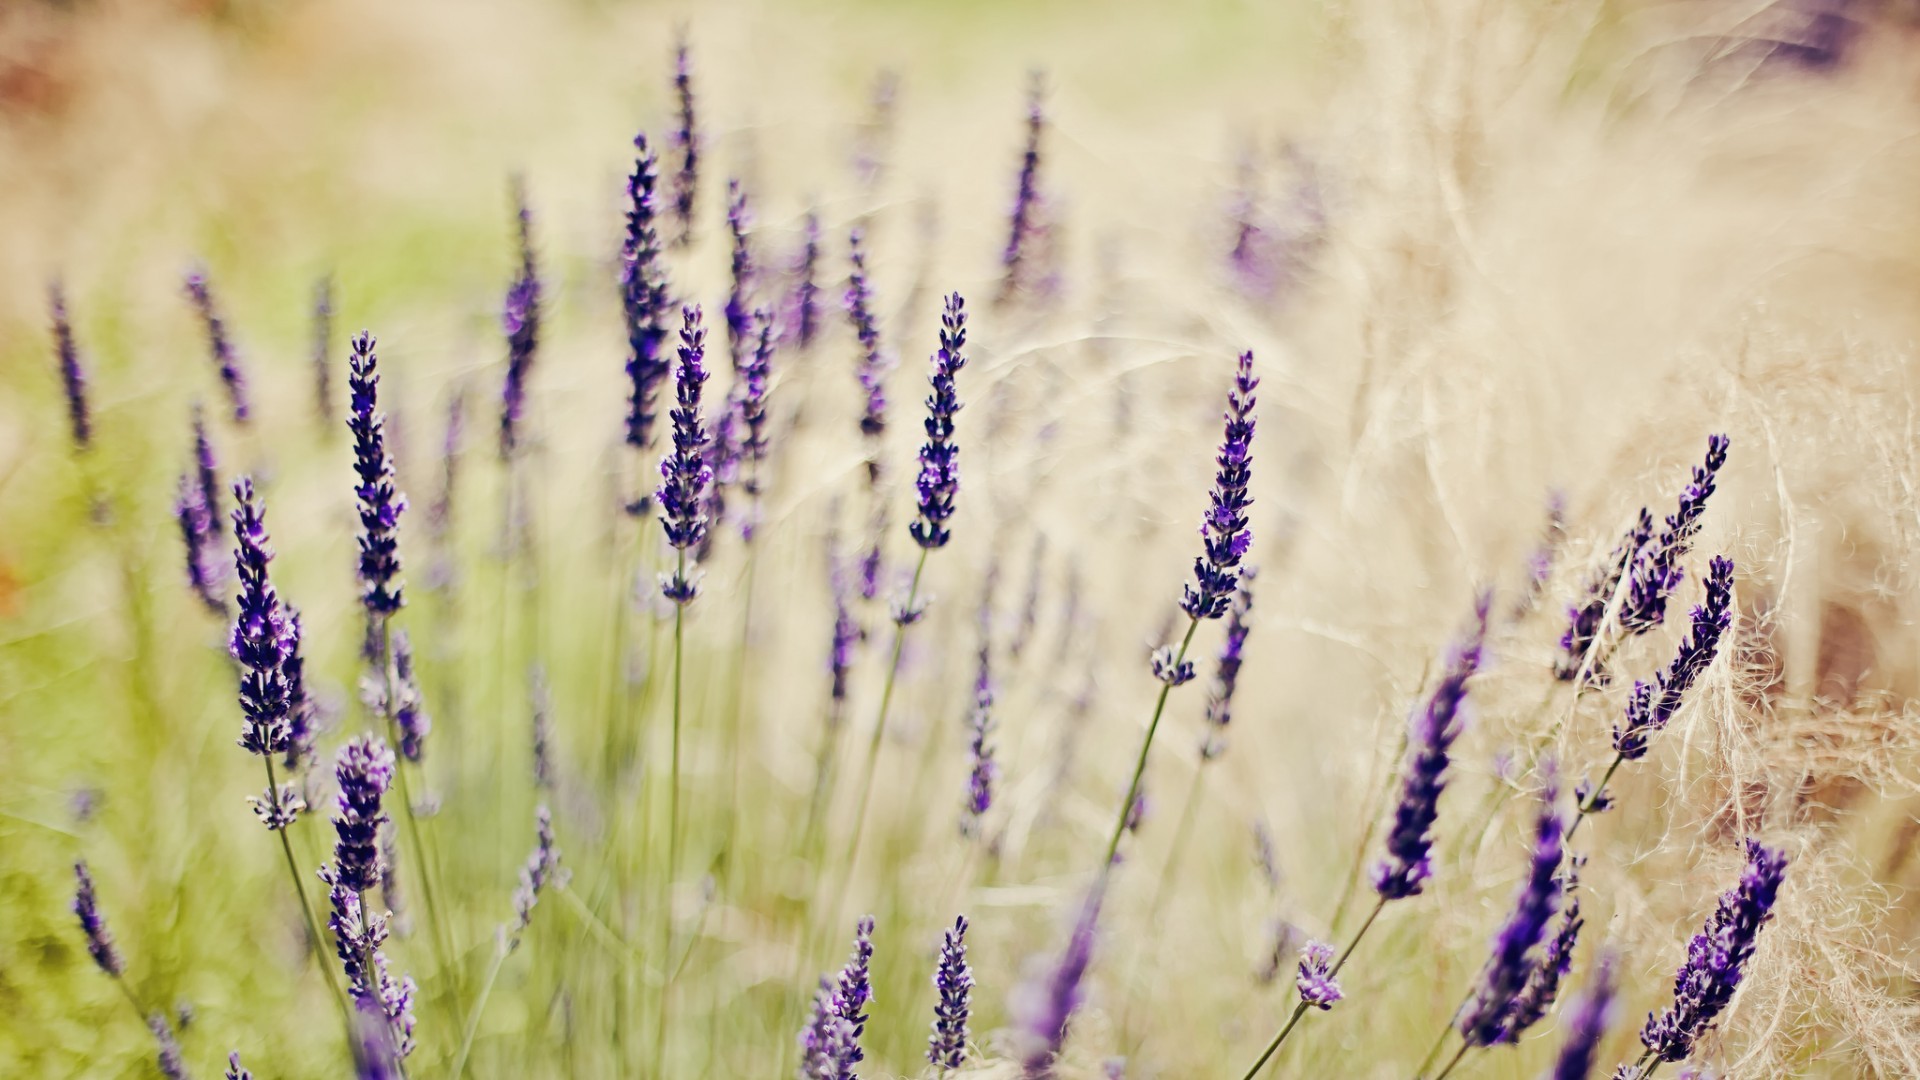 General 1920x1080 nature lavender purple flowers depth of field plants outdoors